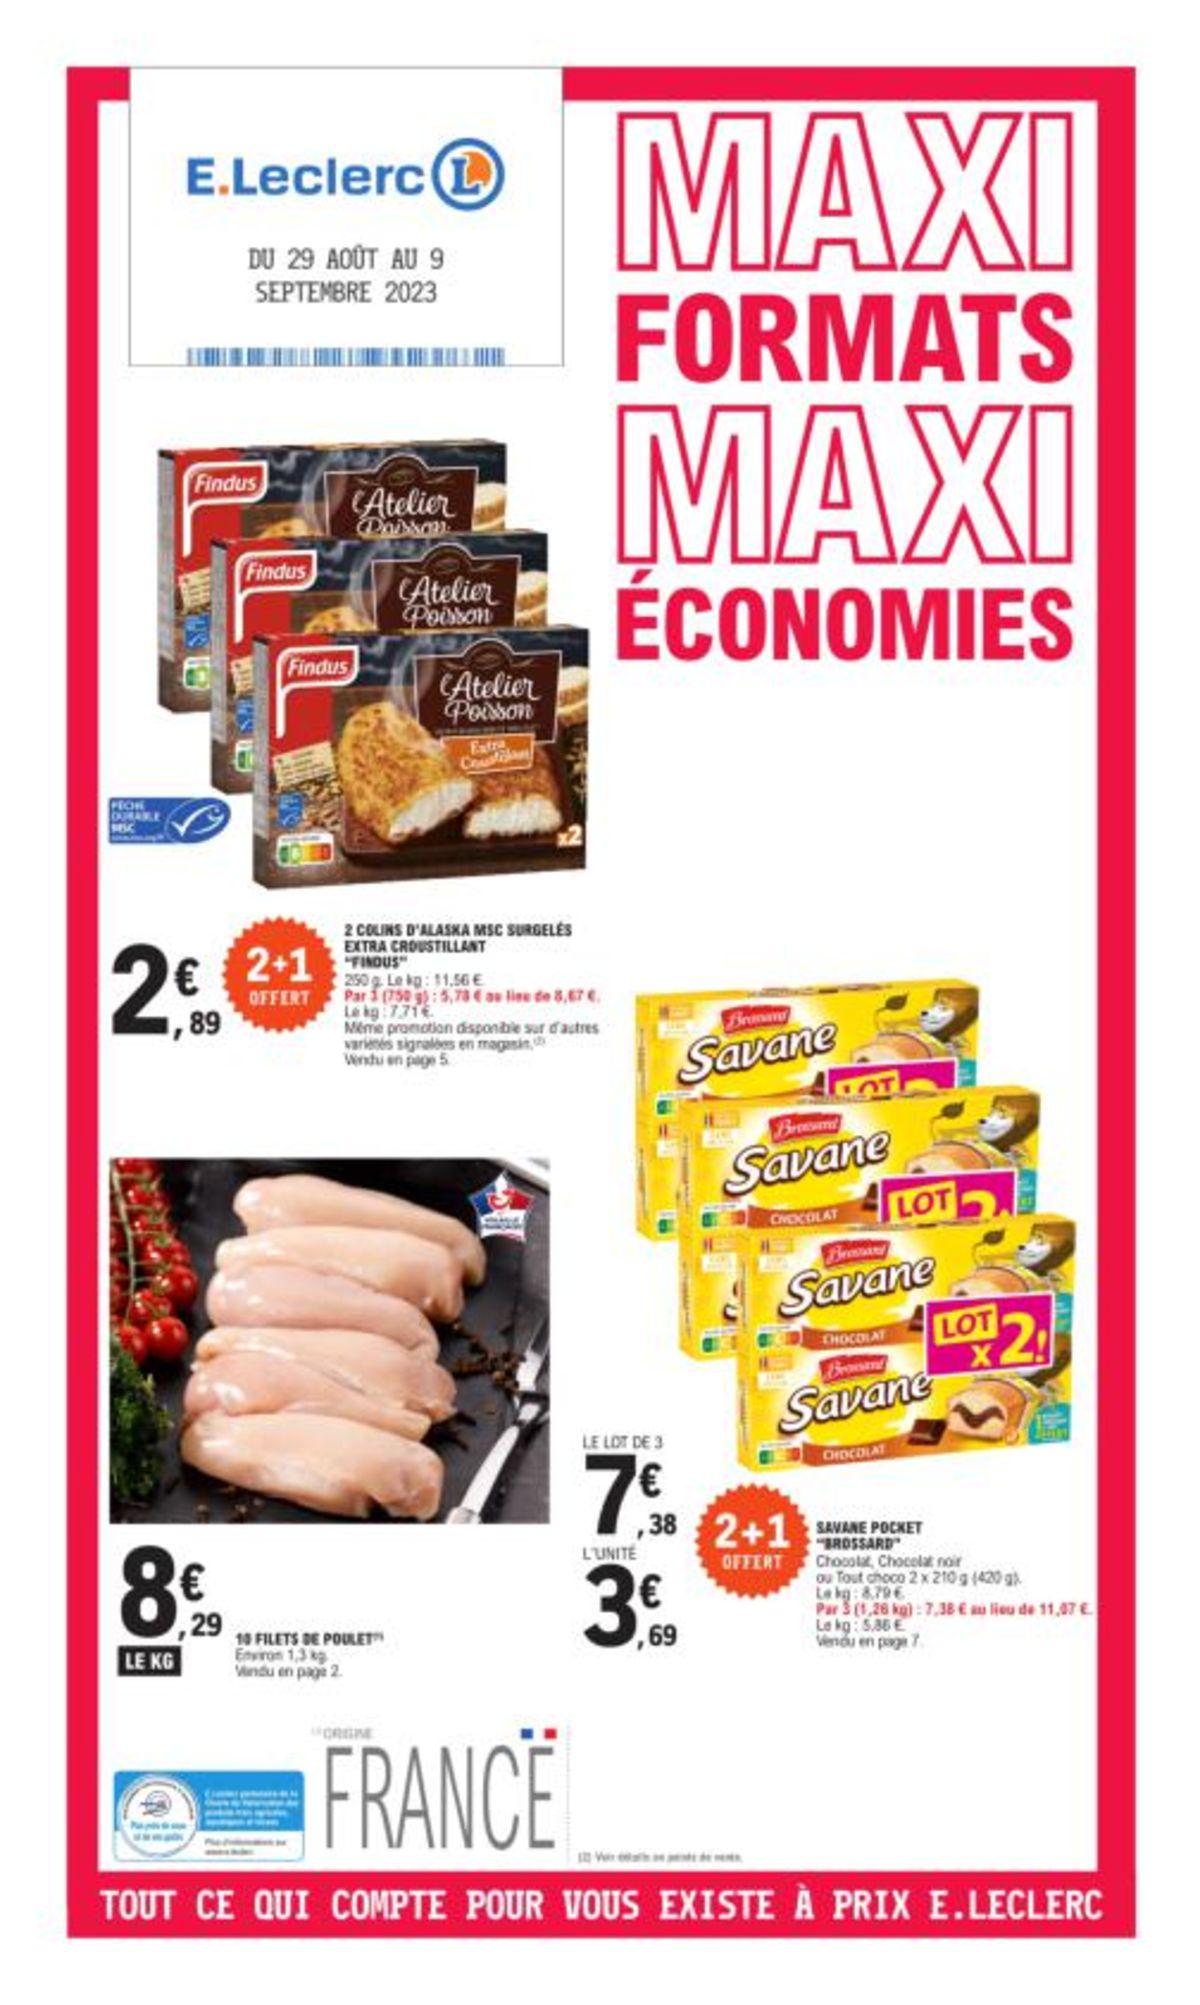 Catalogue Maxi formats maxi économies, page 00001